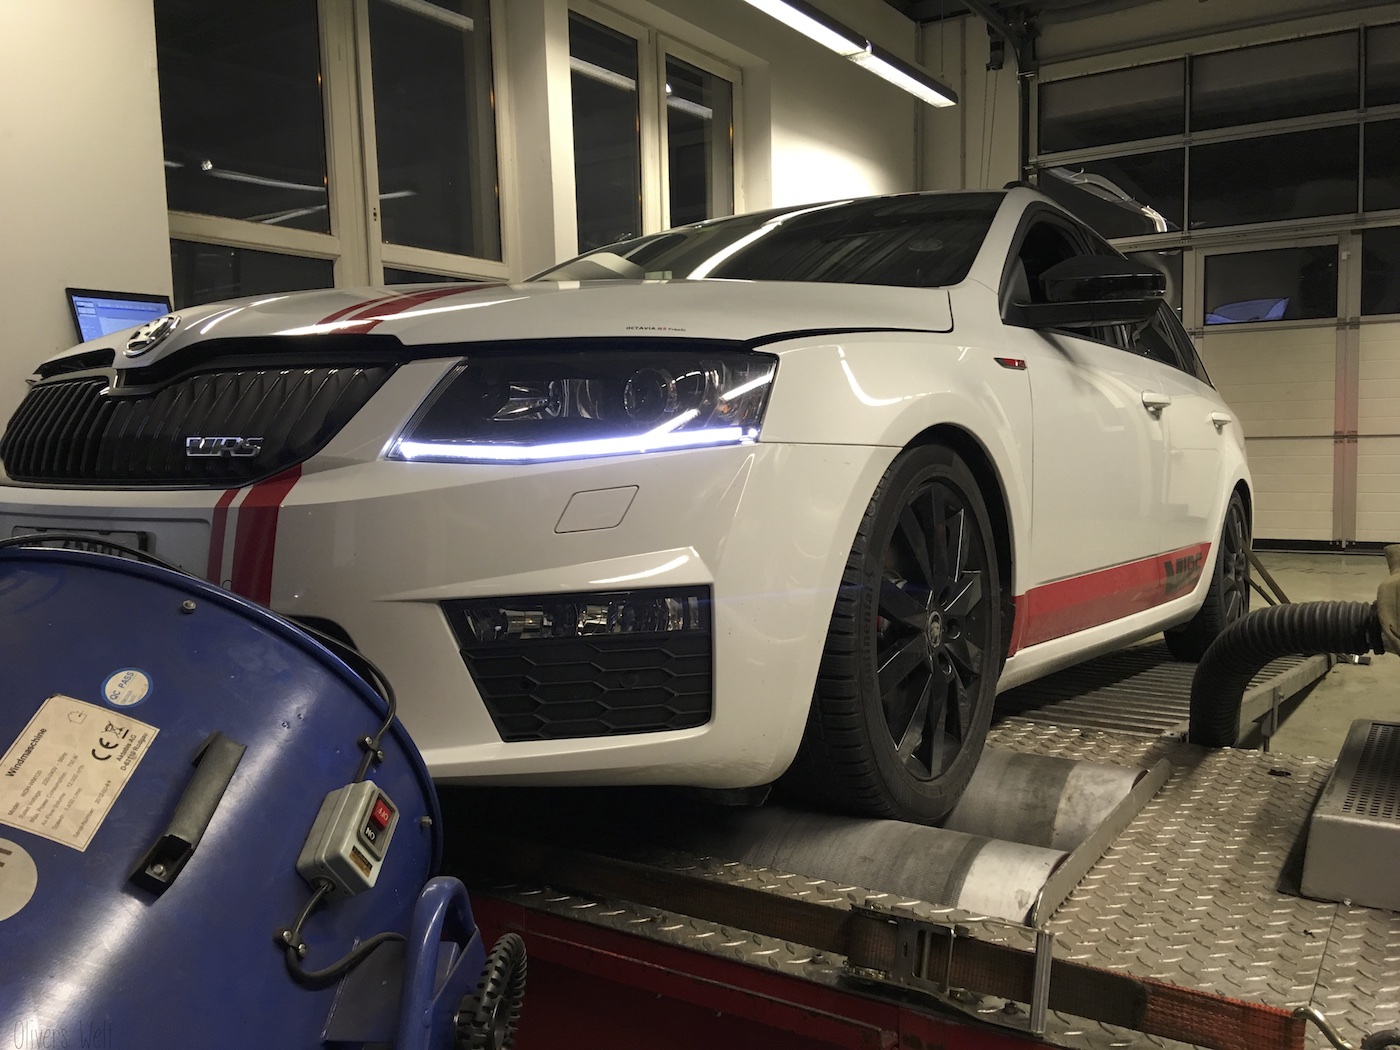 upps, I did it again :-) Leistungssteigerung für den Škoda Octavia RS TDI